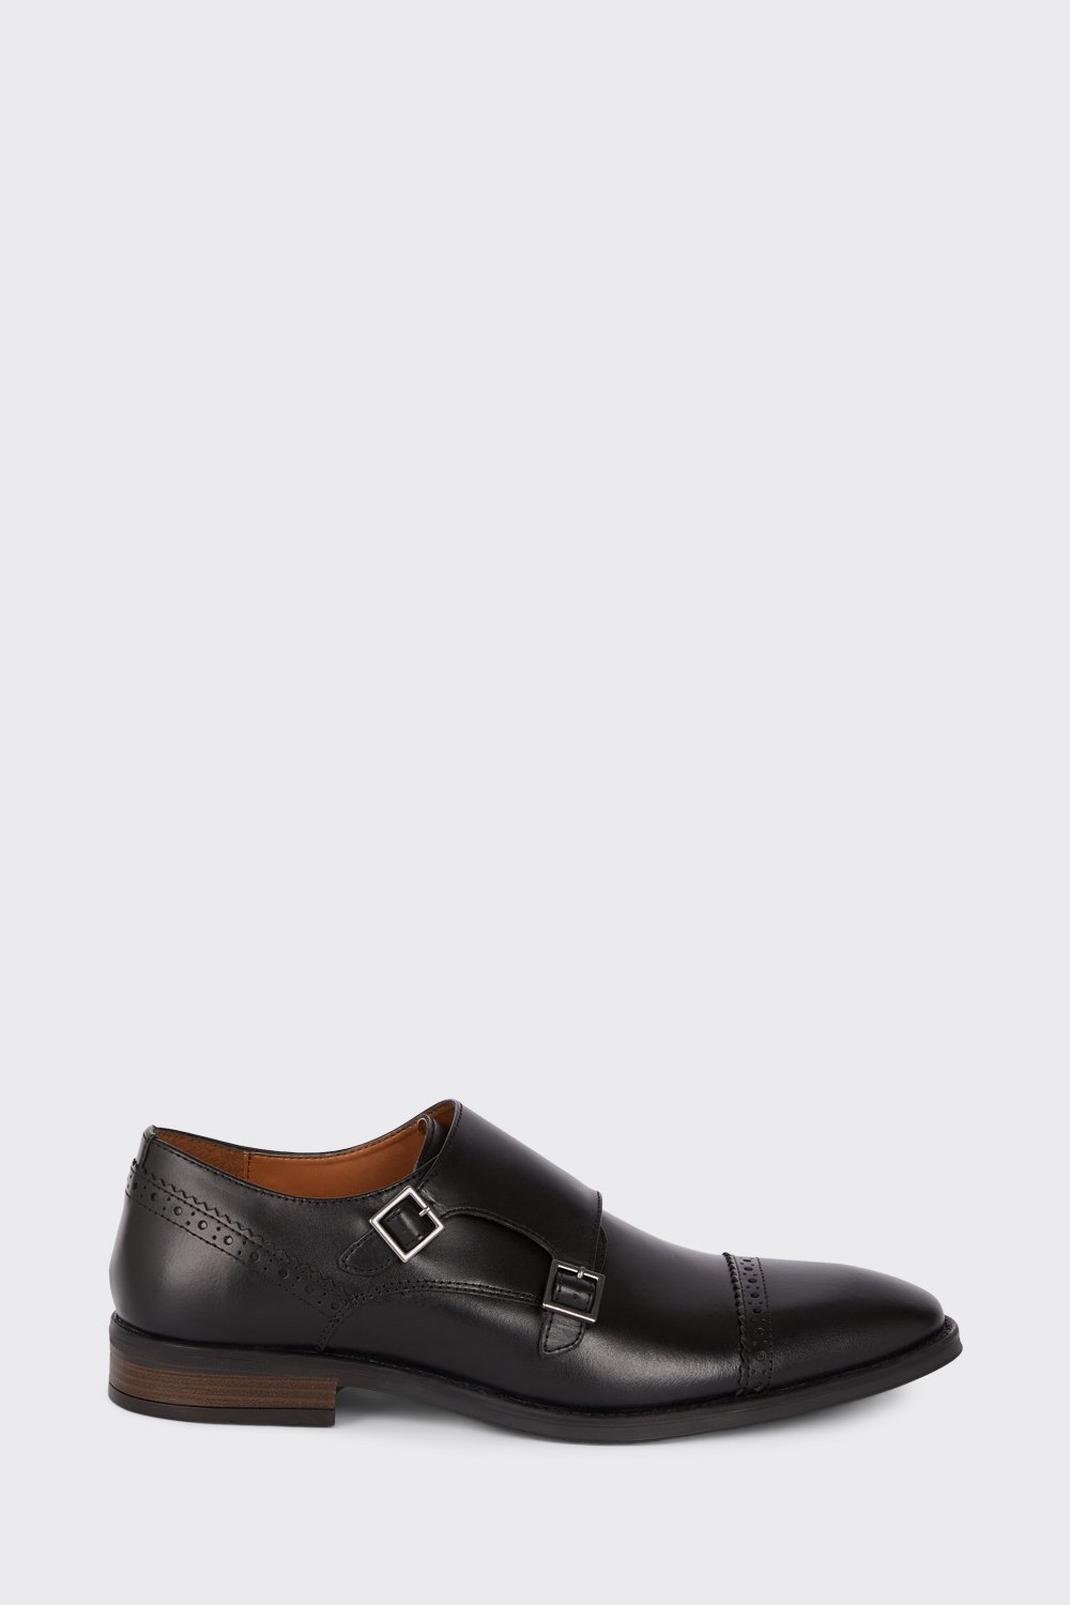 Leather Smart Black Brogue Monk Shoes image number 1